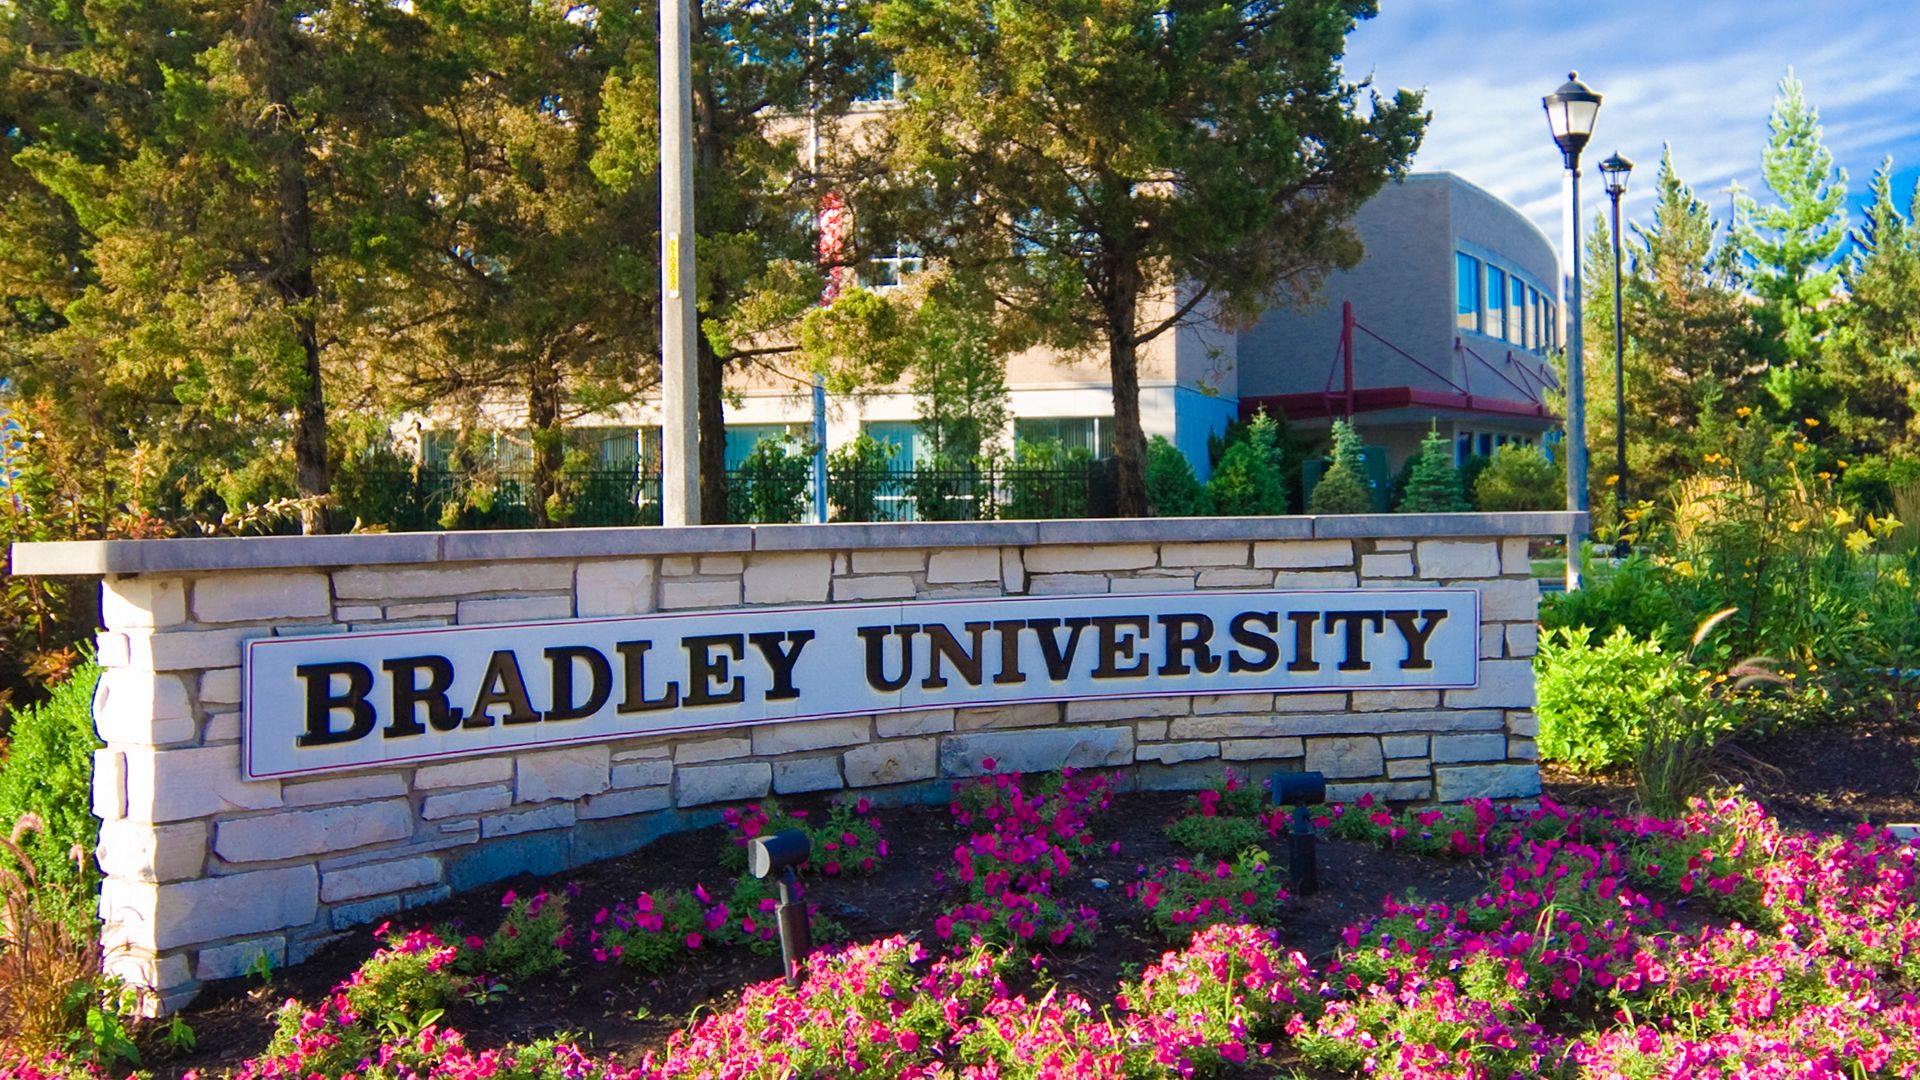 Bradley University sign